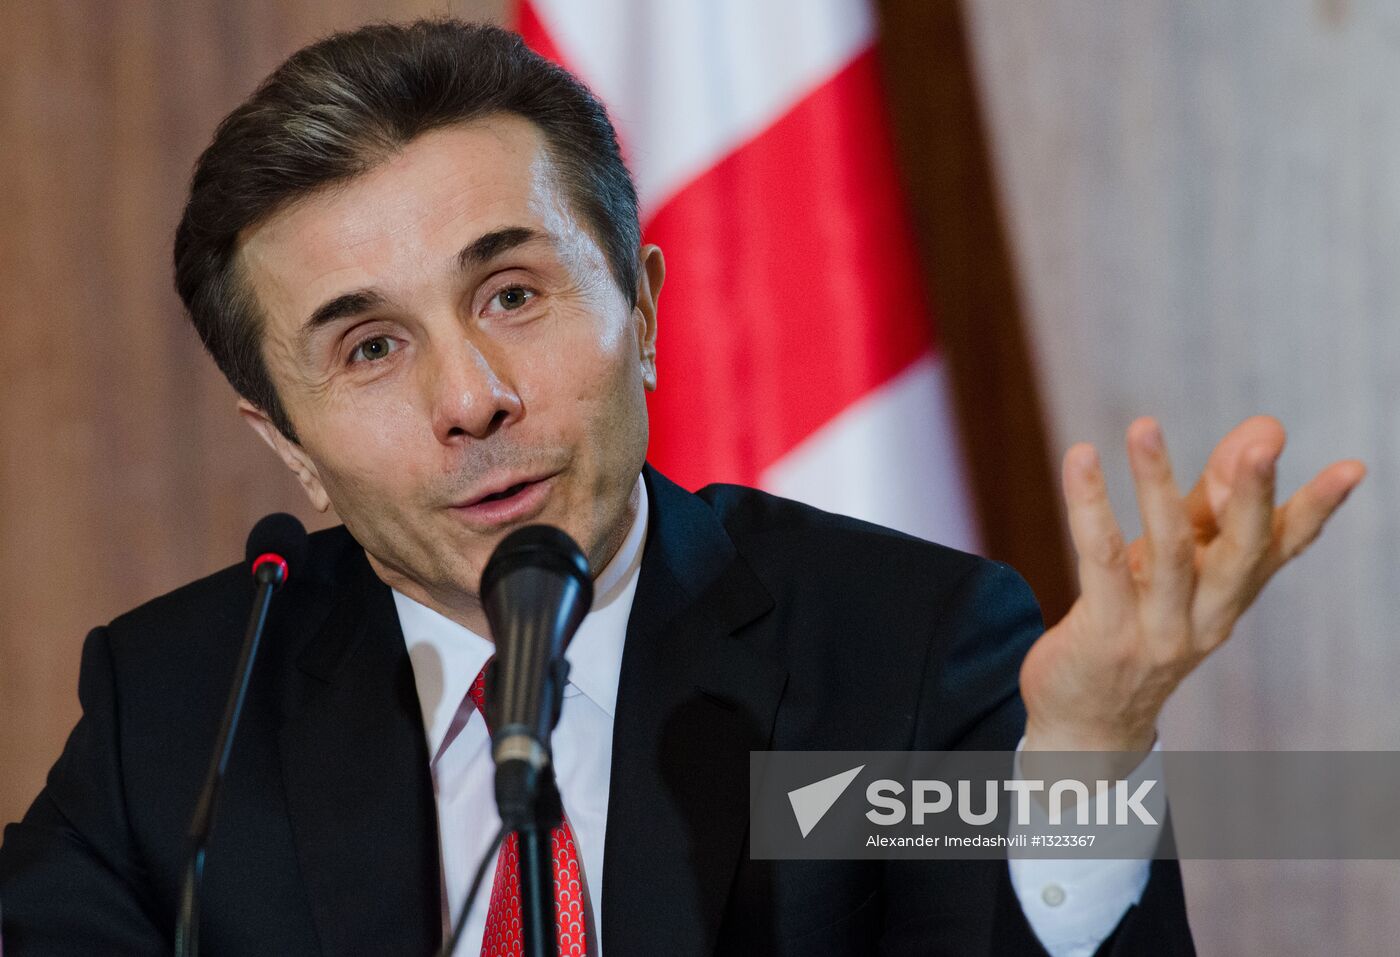 Ivanishvili confirms Georgia's participation in 2014 Sochi Games